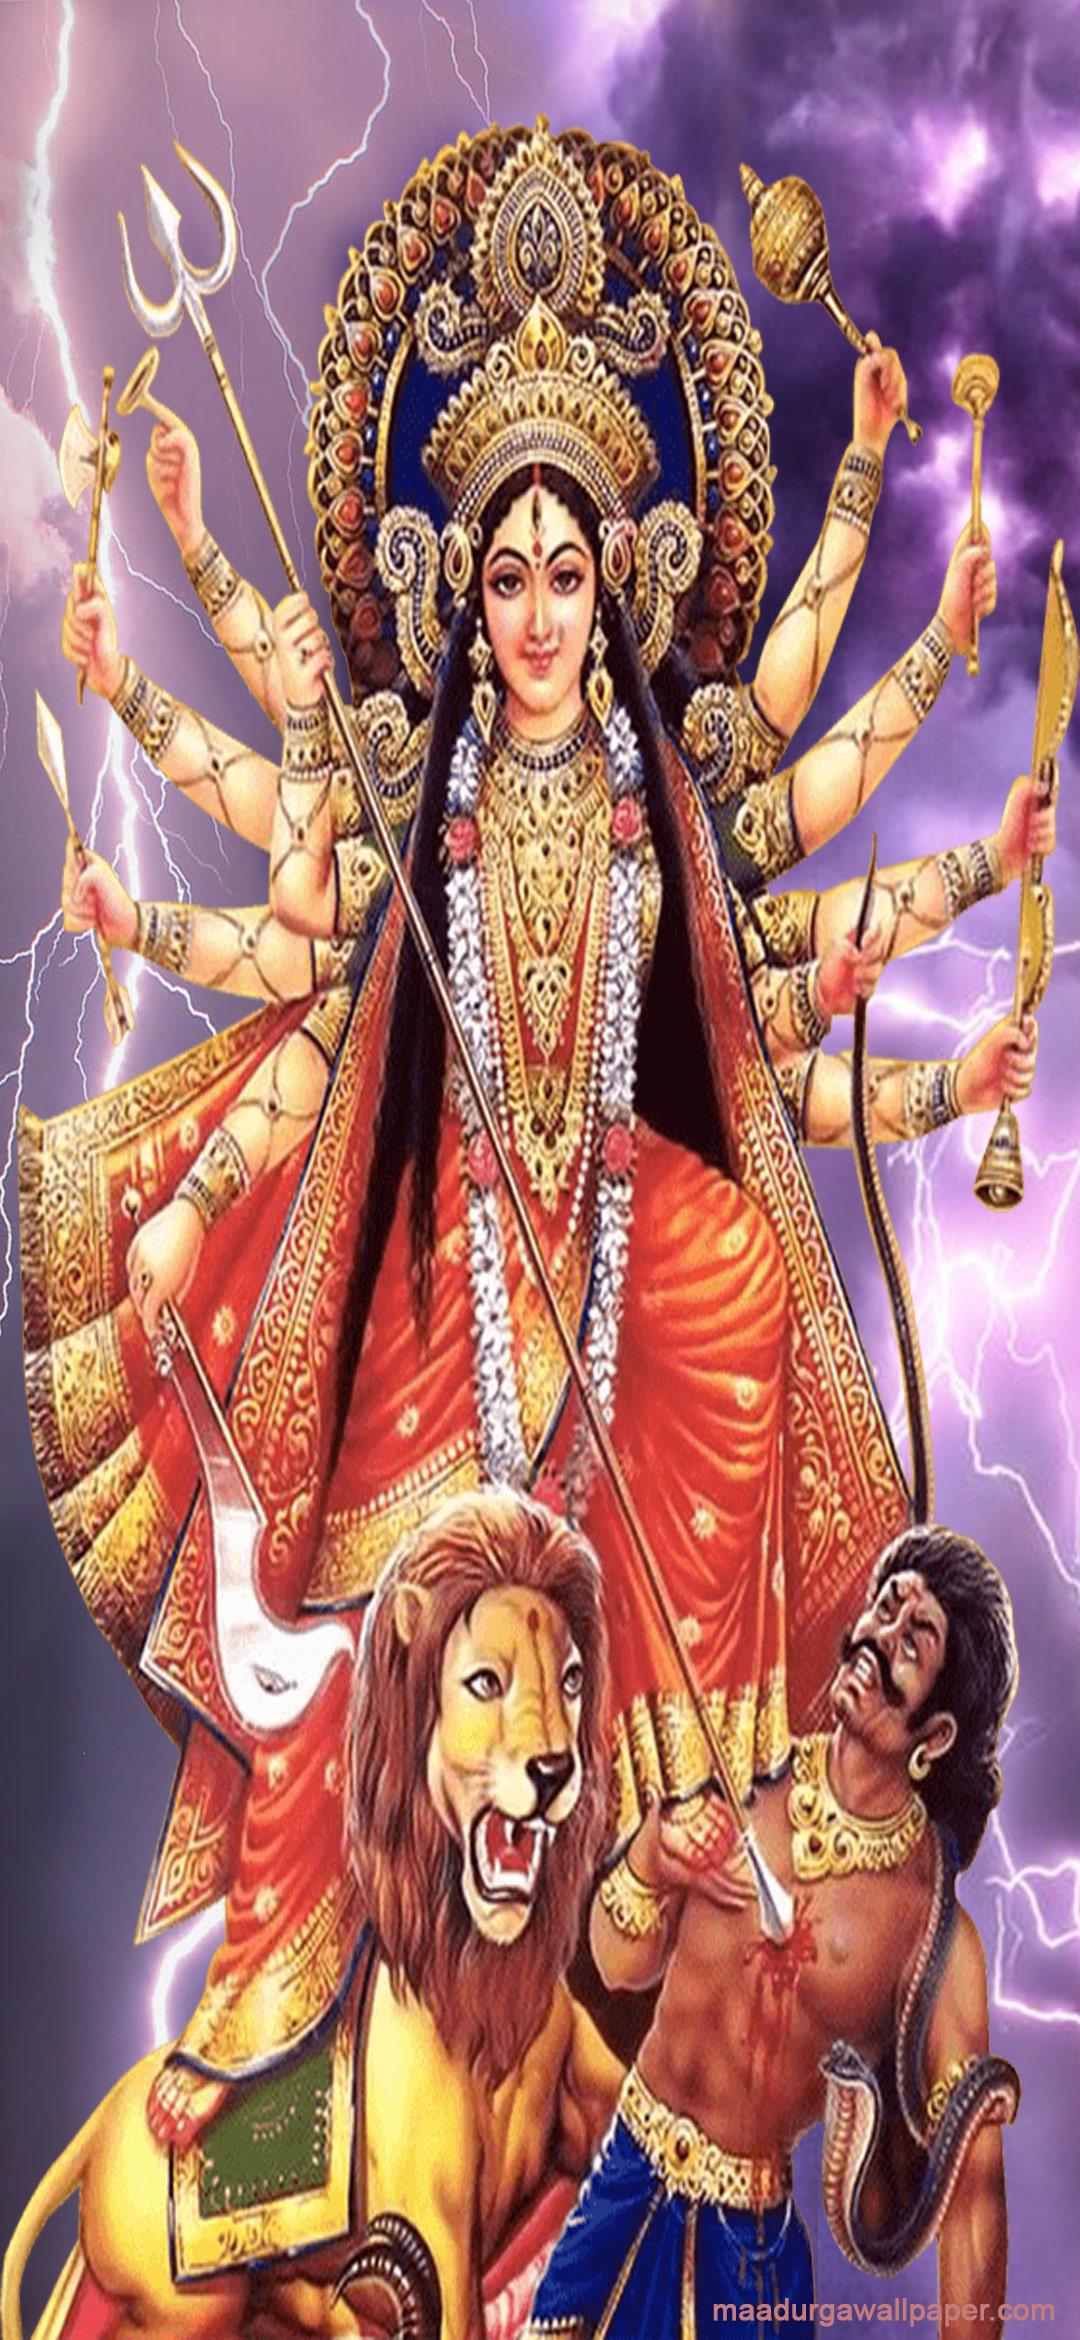 Maa Durga mobile background photo